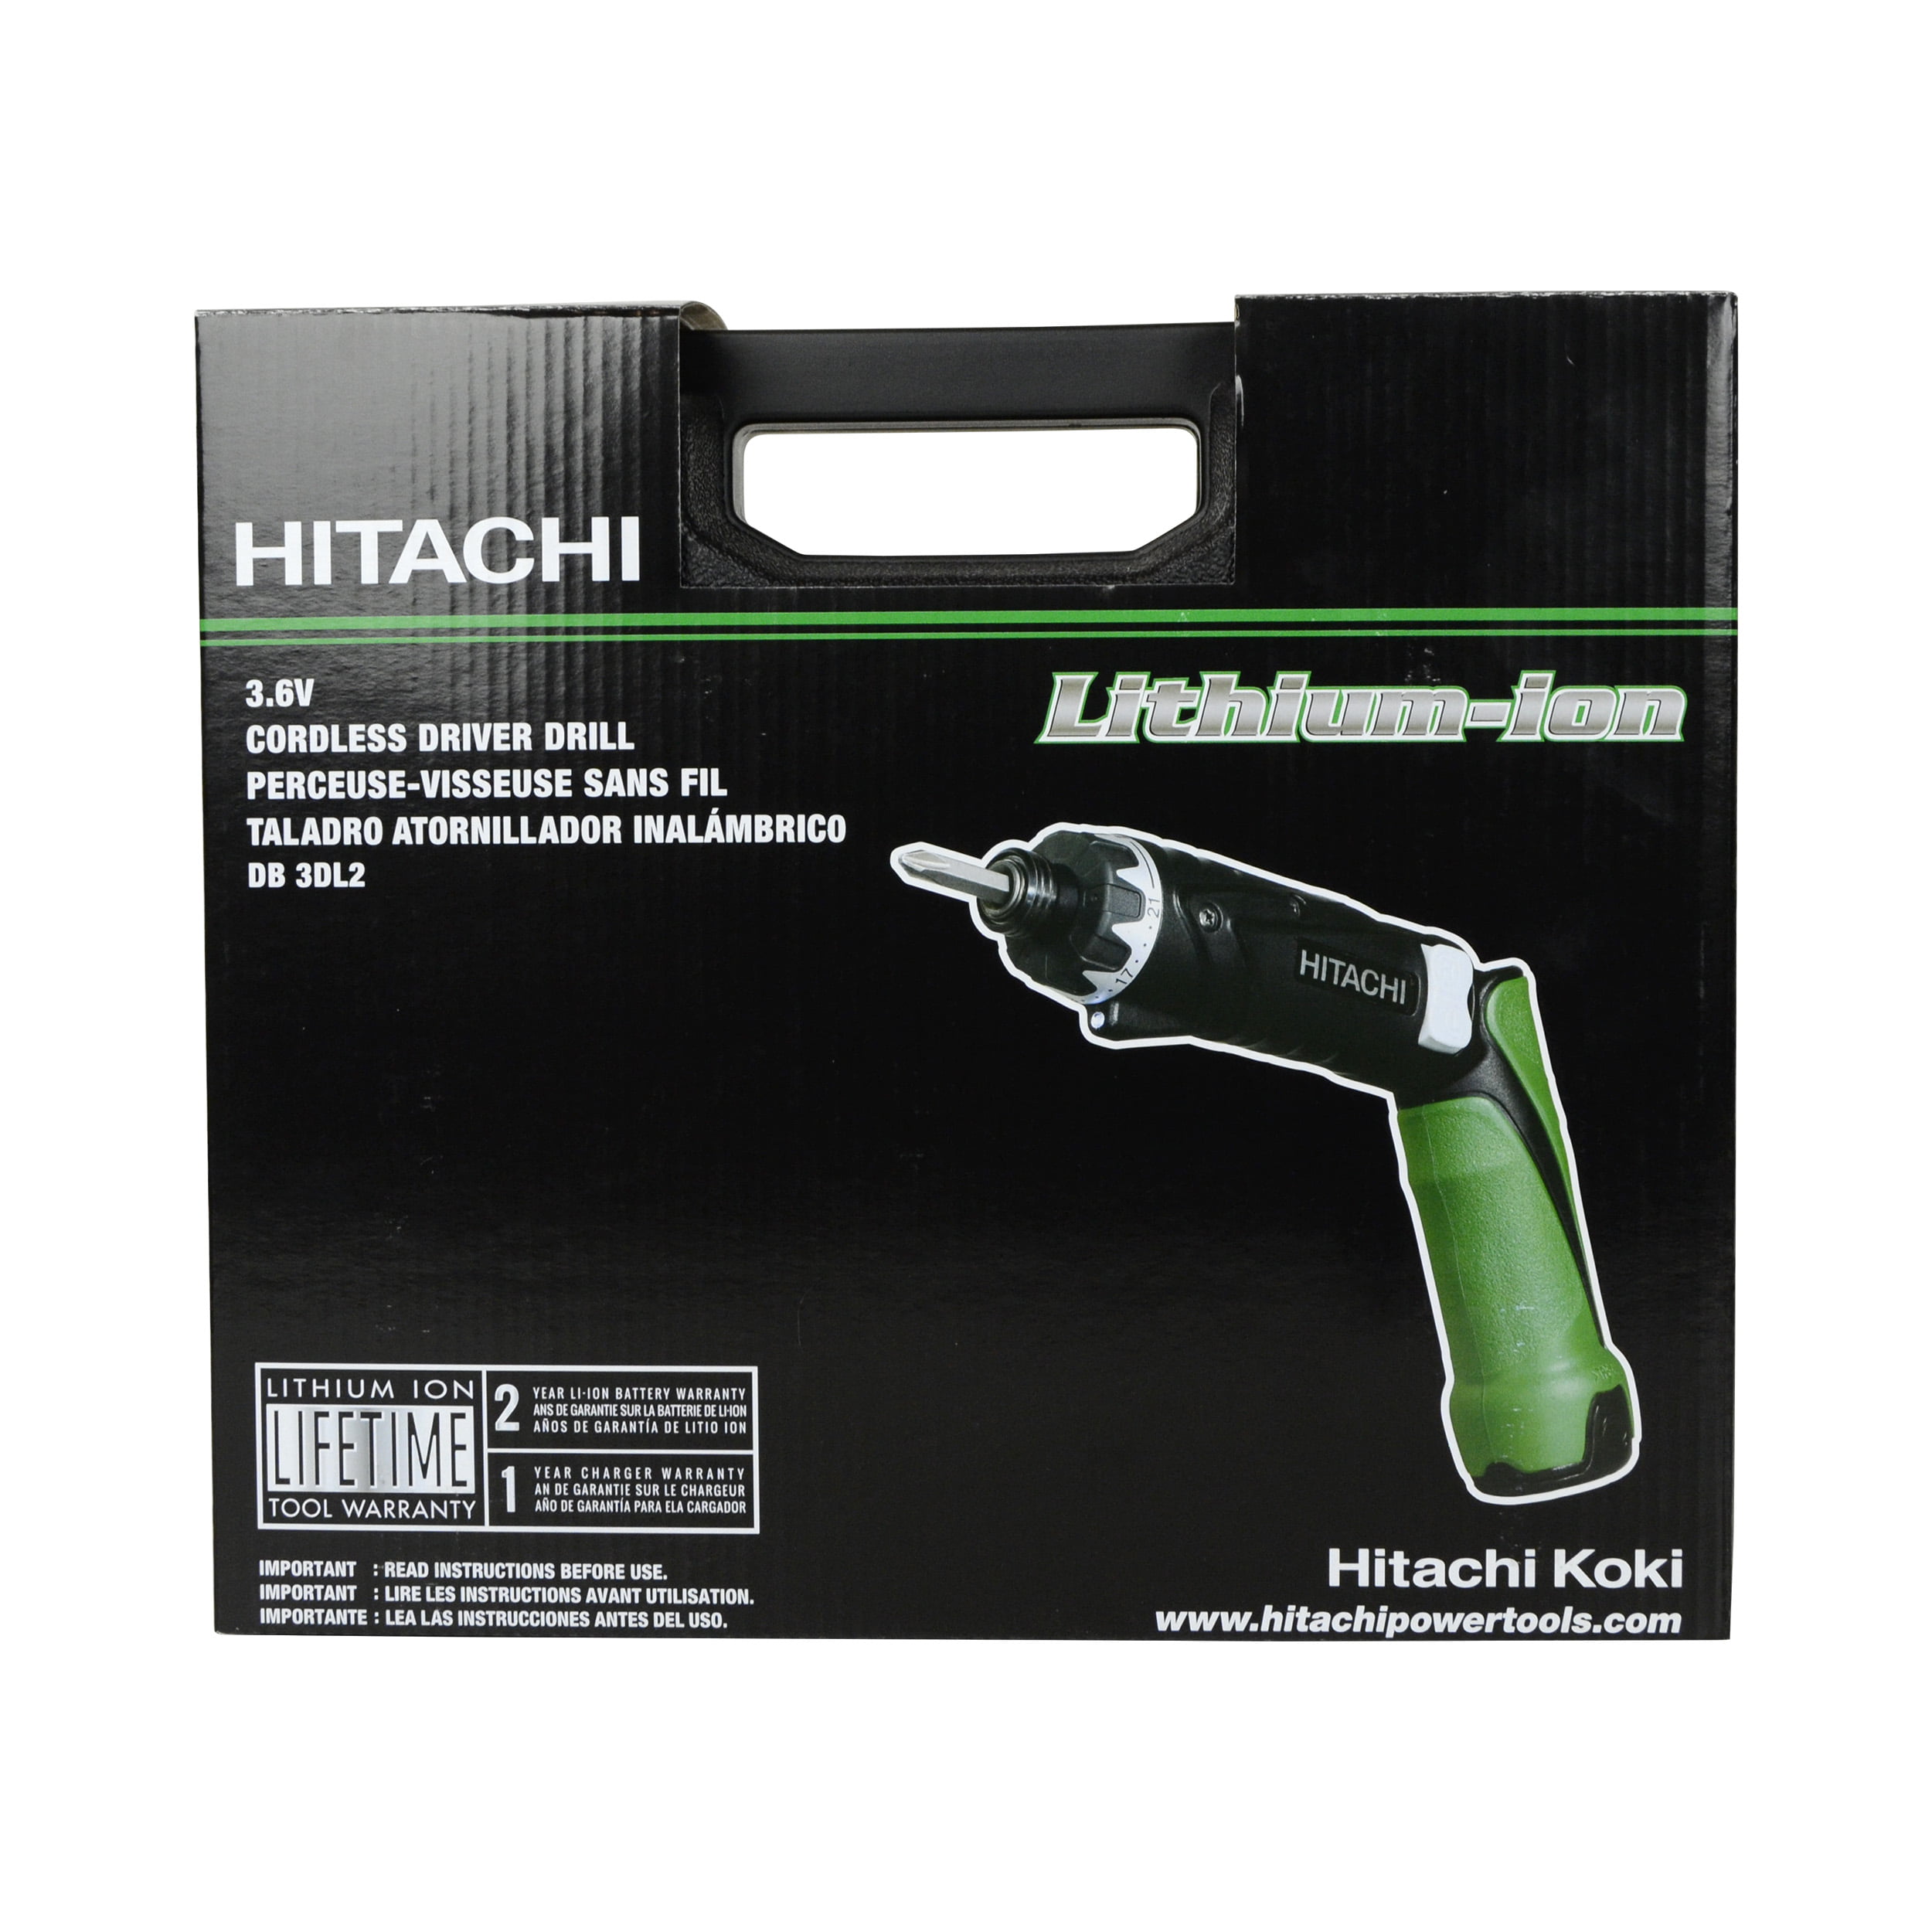 Image of Hitachi DB3DL2 cordless drill at Walmart